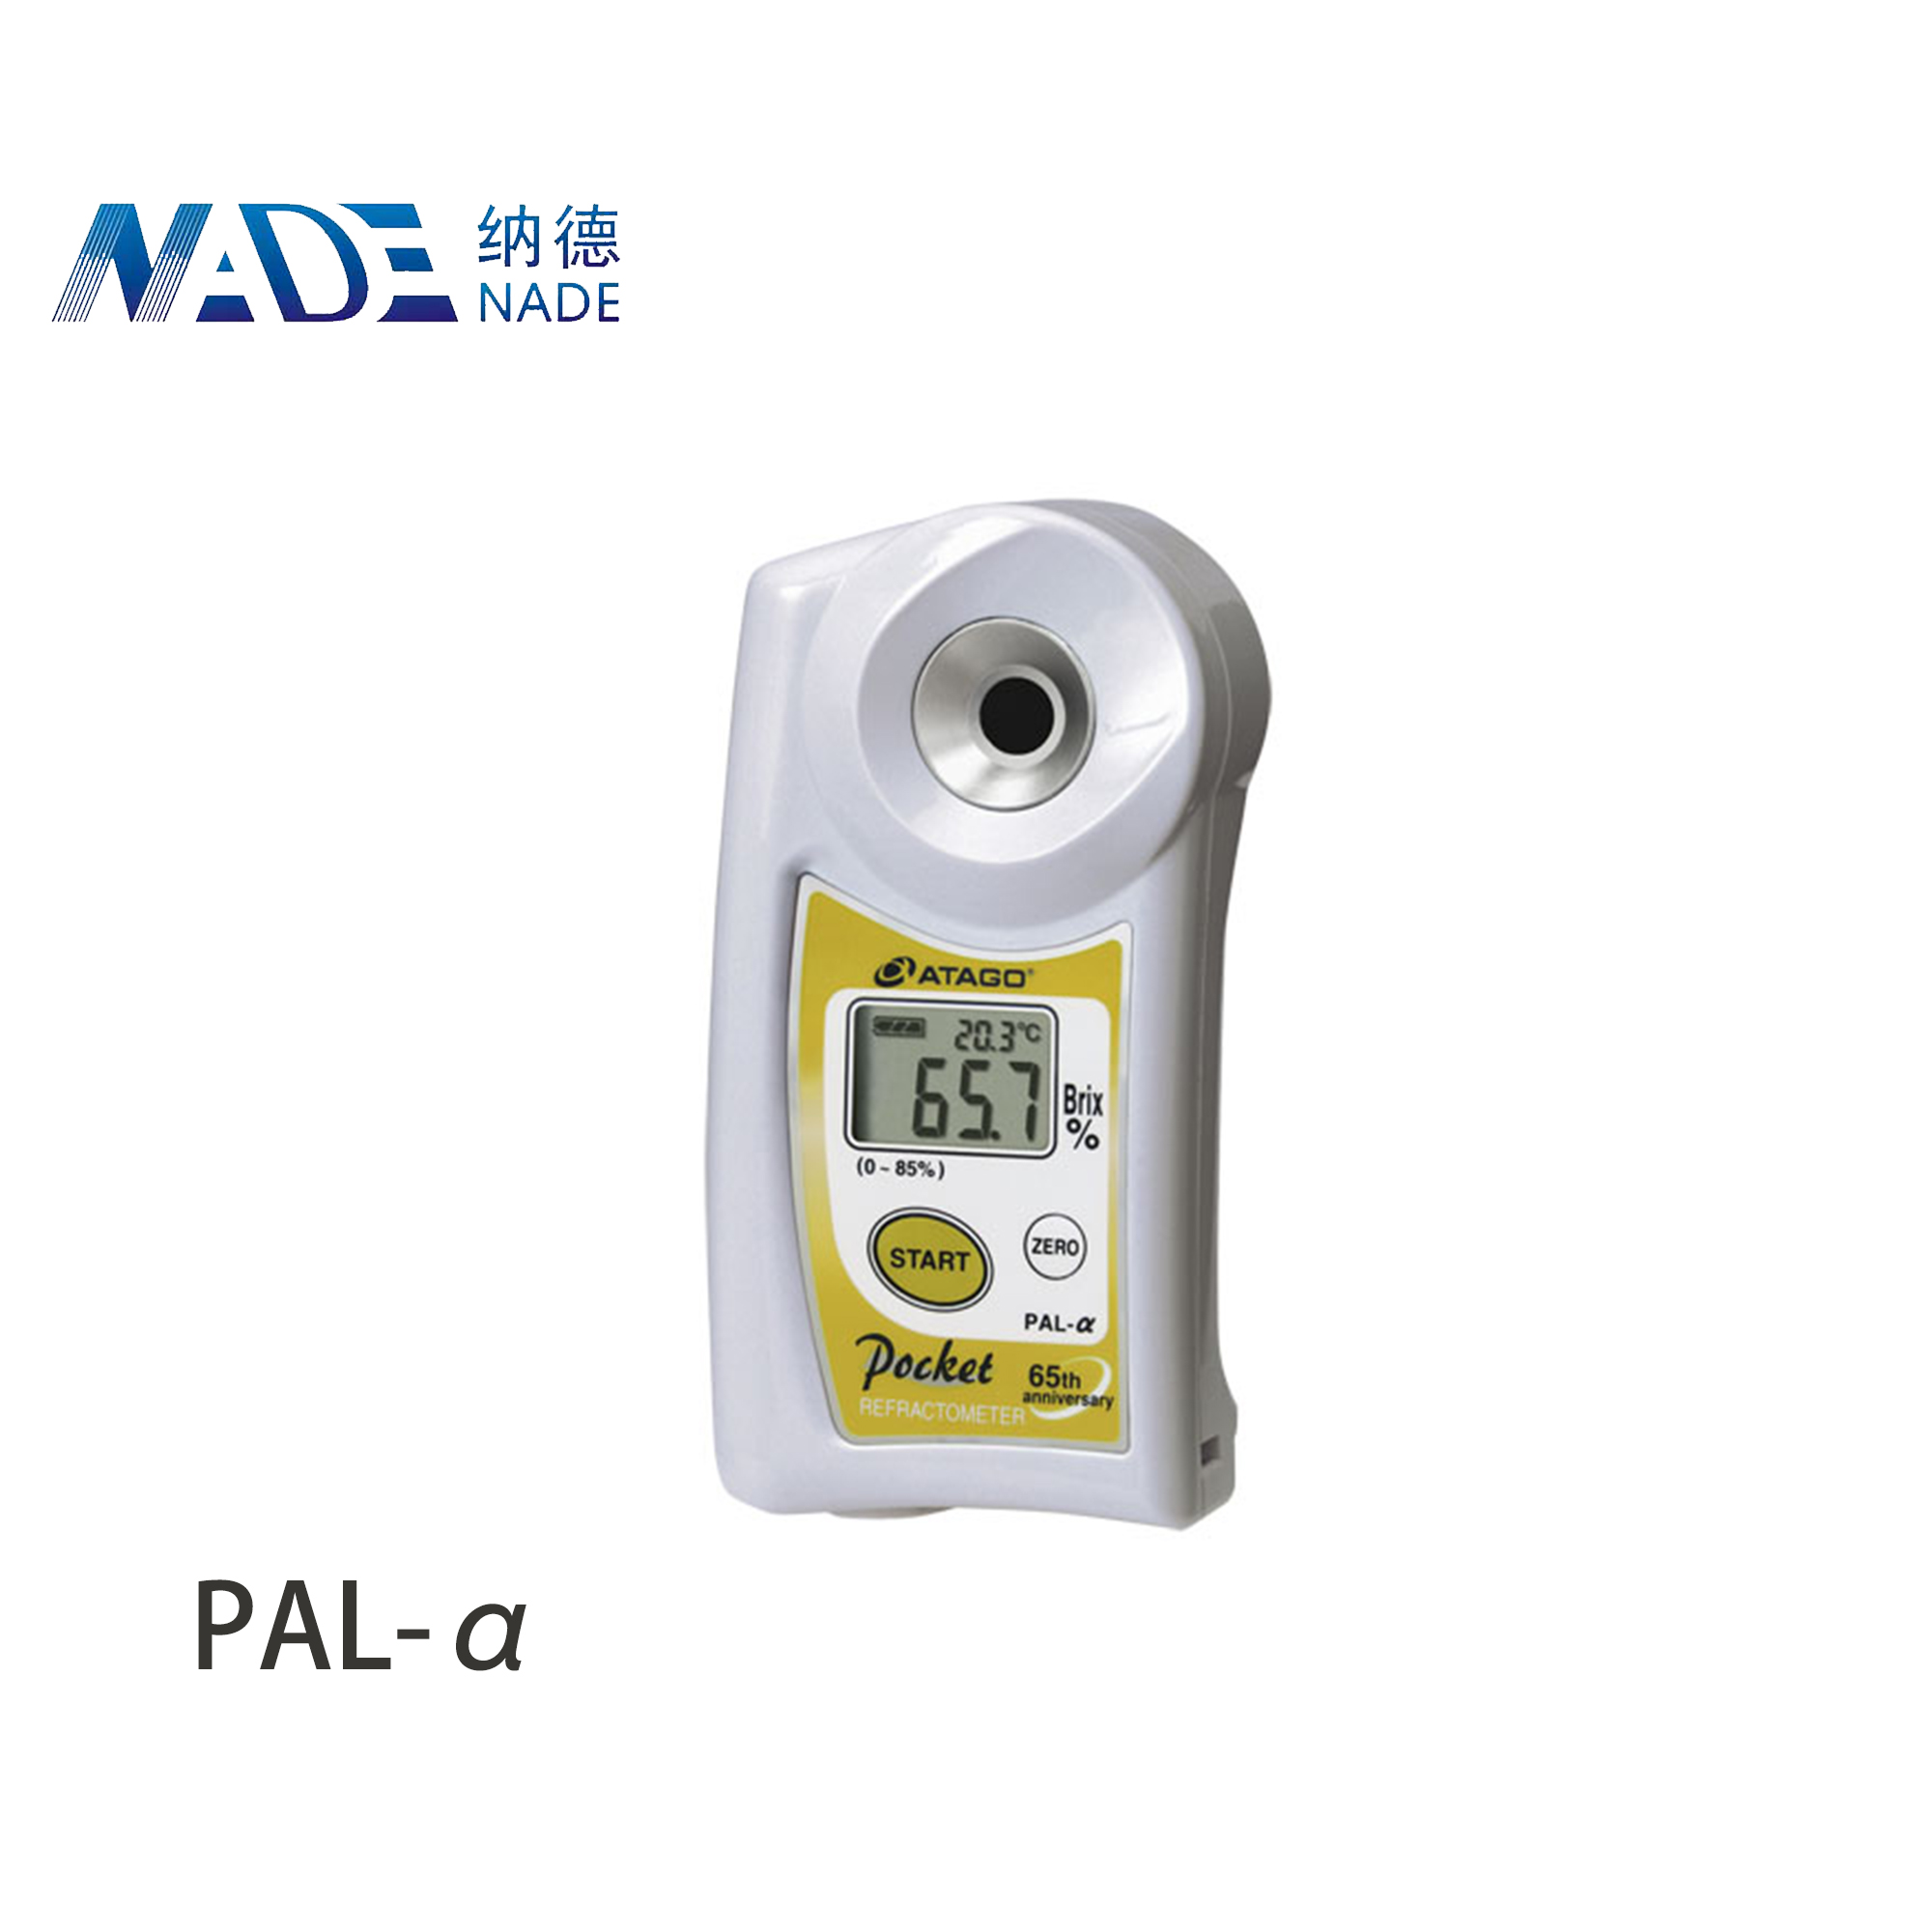 PAL-alpha Digital Atago refractometer (polarimeter) hand held auto refractometer wide range(0-85%)